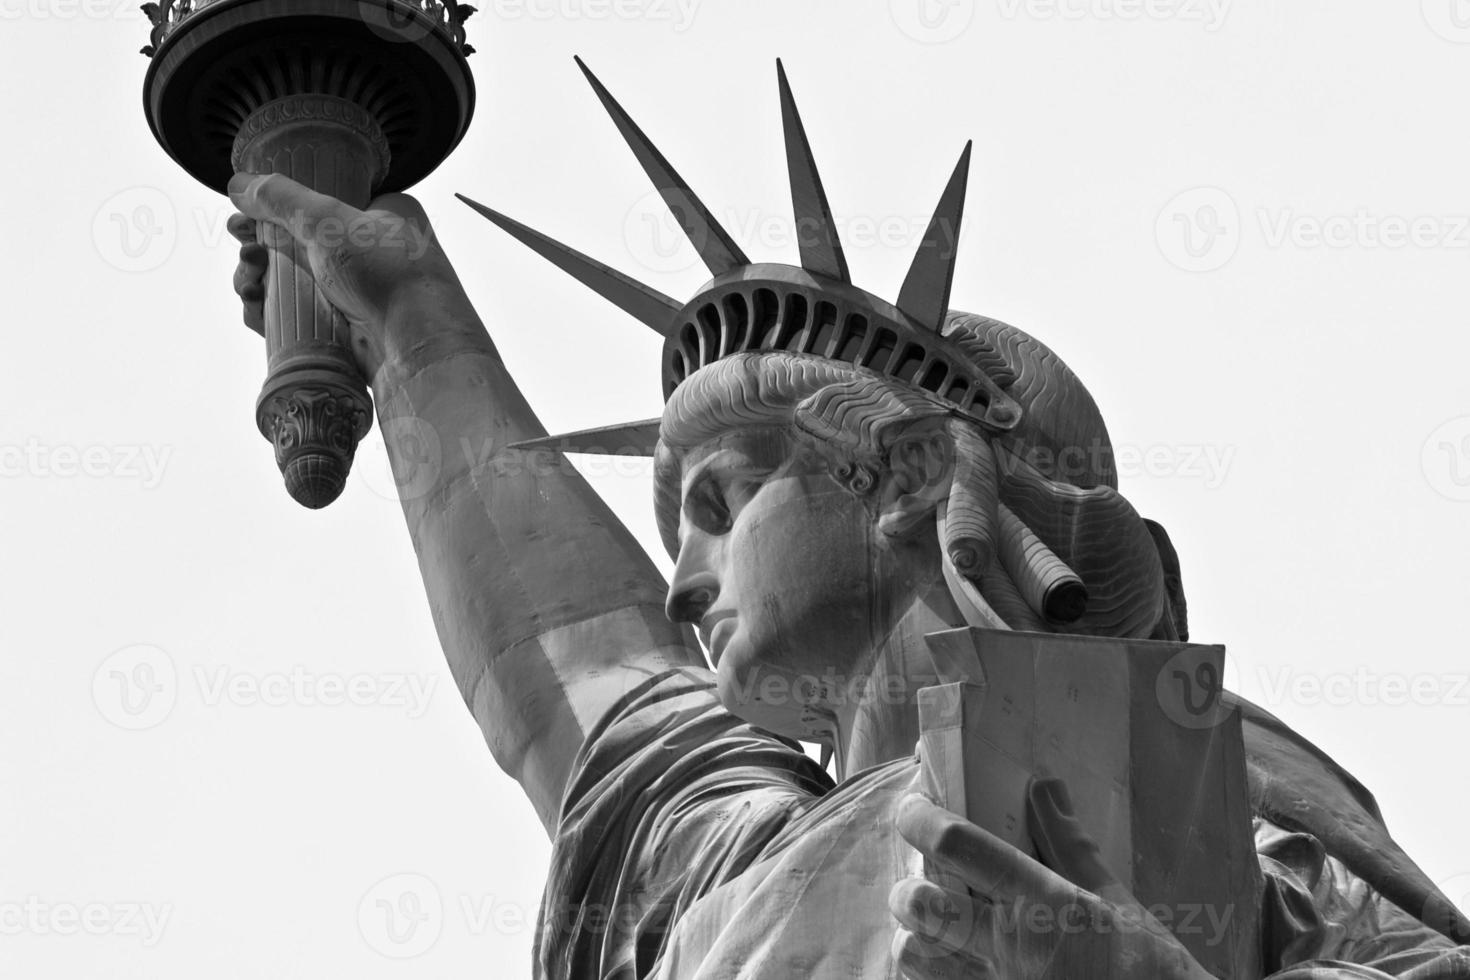 Statue of Liberty photo